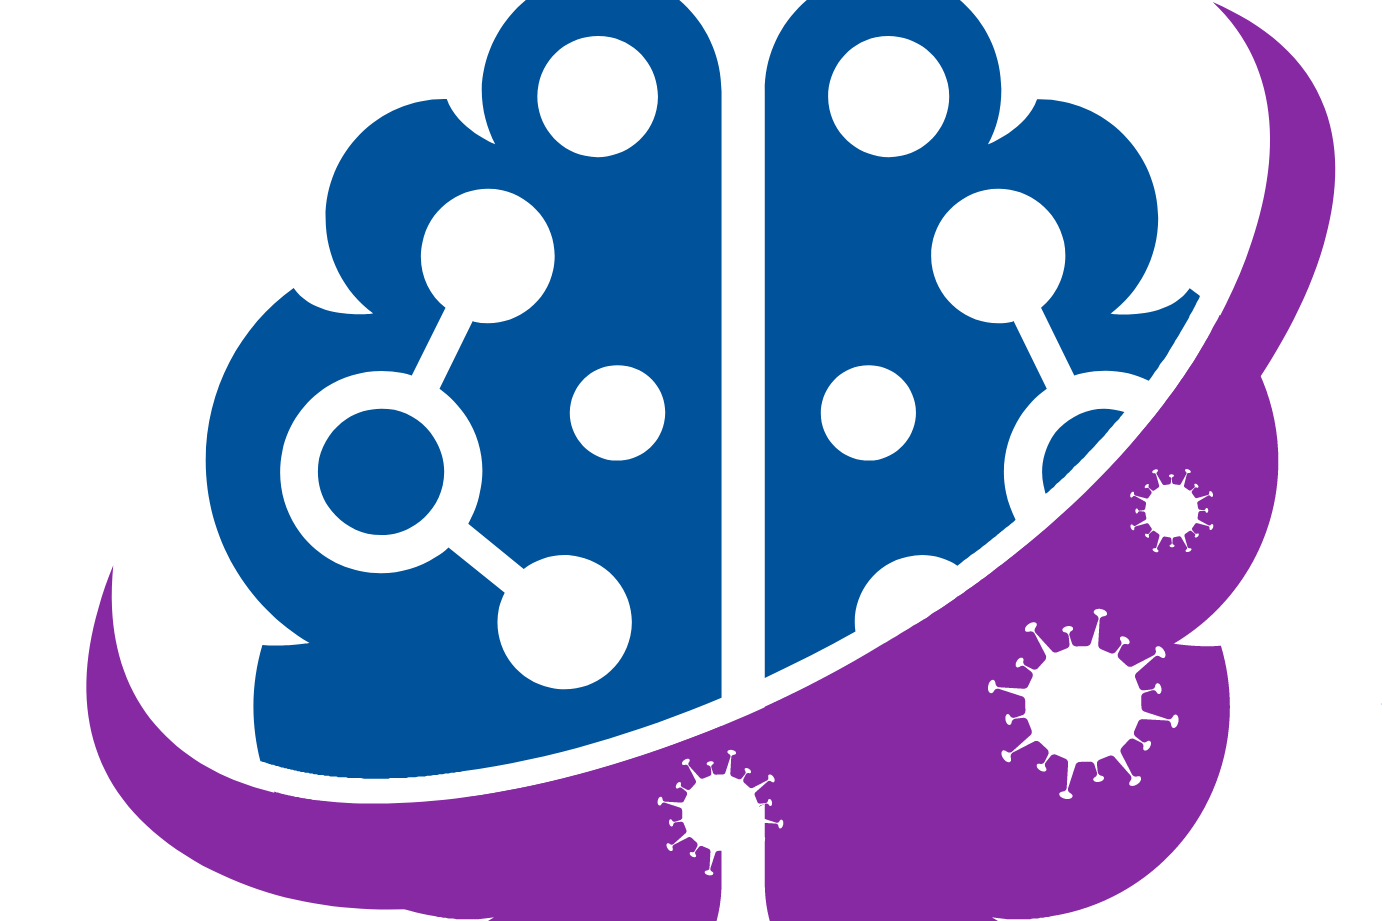 Brain logo with microbe icons